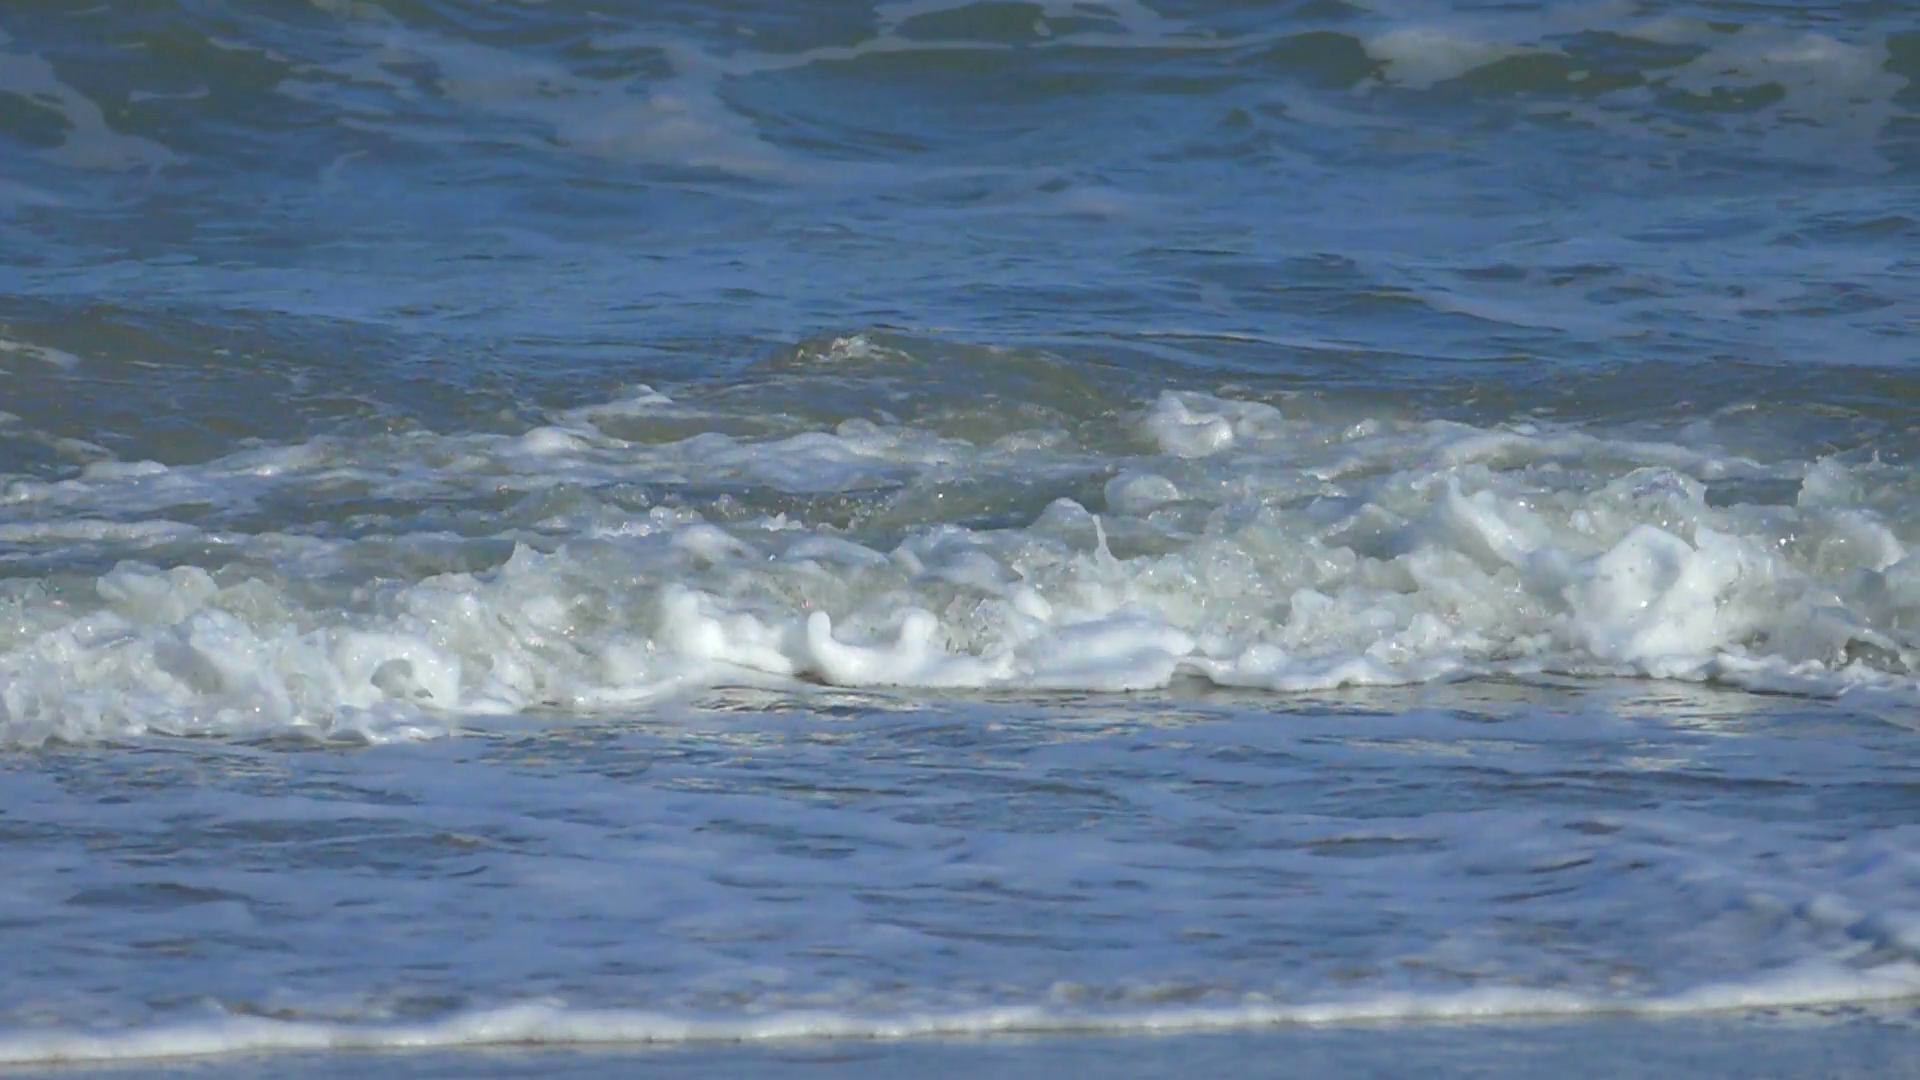 Slow Motion Beautiful Blue Giant Ocean Wave Crashing on Beach in ...